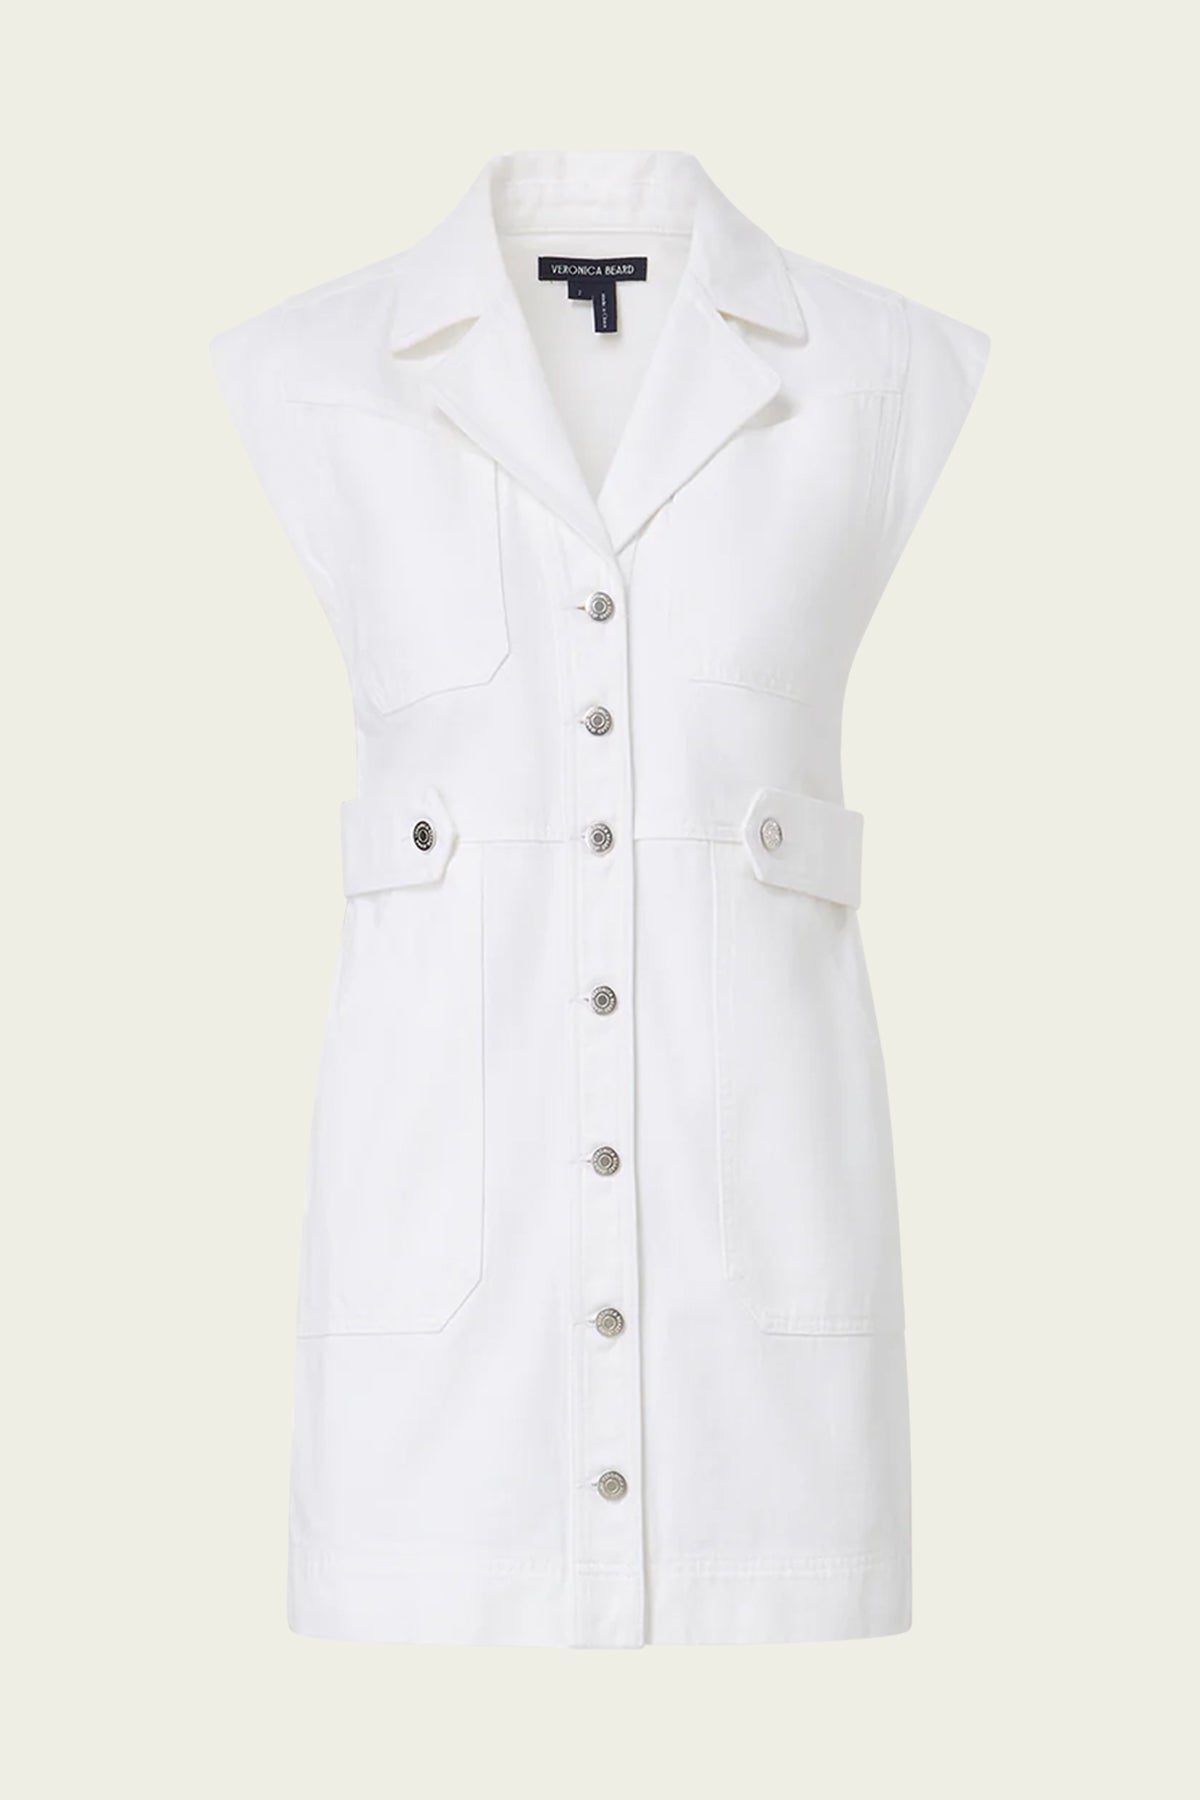 Jax Denim Shirtdress in White - shop-olivia.com